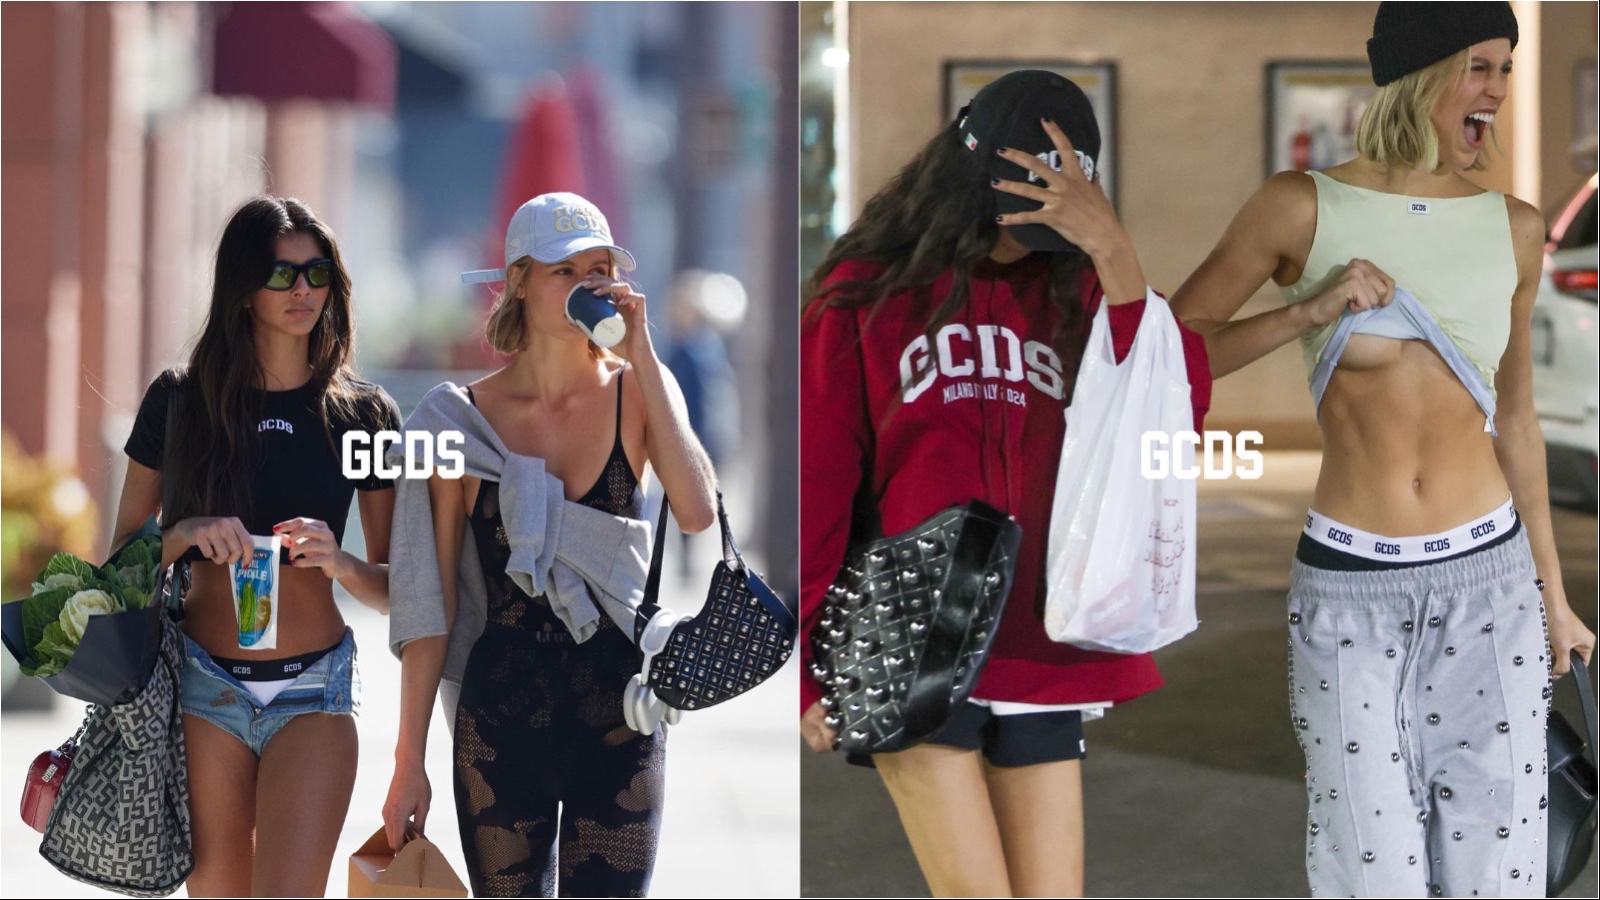 Nova modna kampanja brenda GCDS slavi paparazzo kulturu